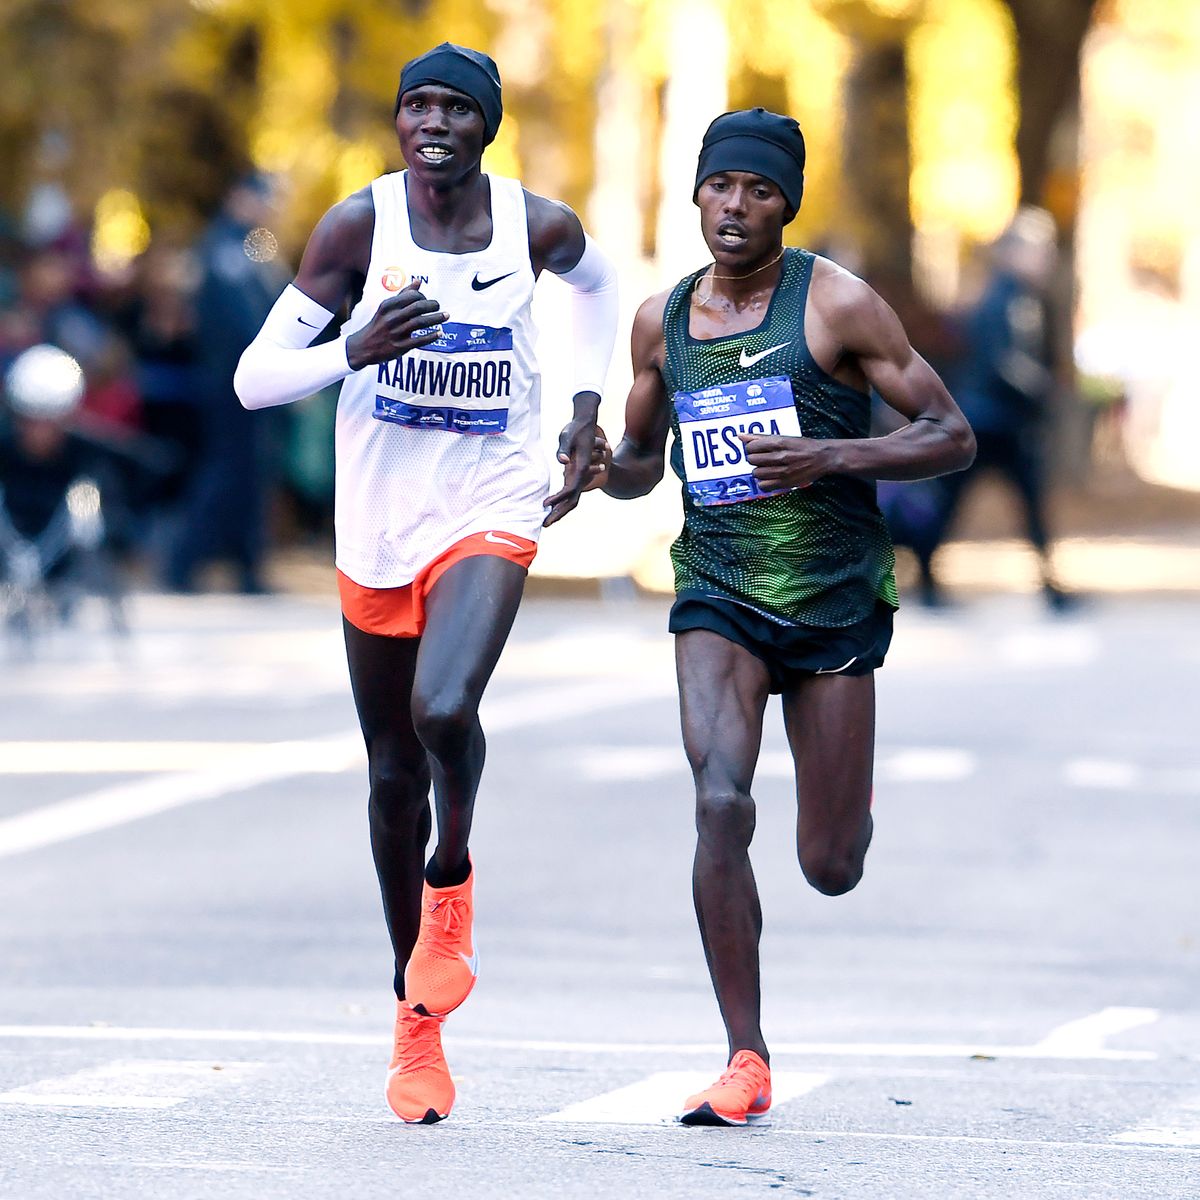 Elite Runners Competing in the 2019 New York City Marathon